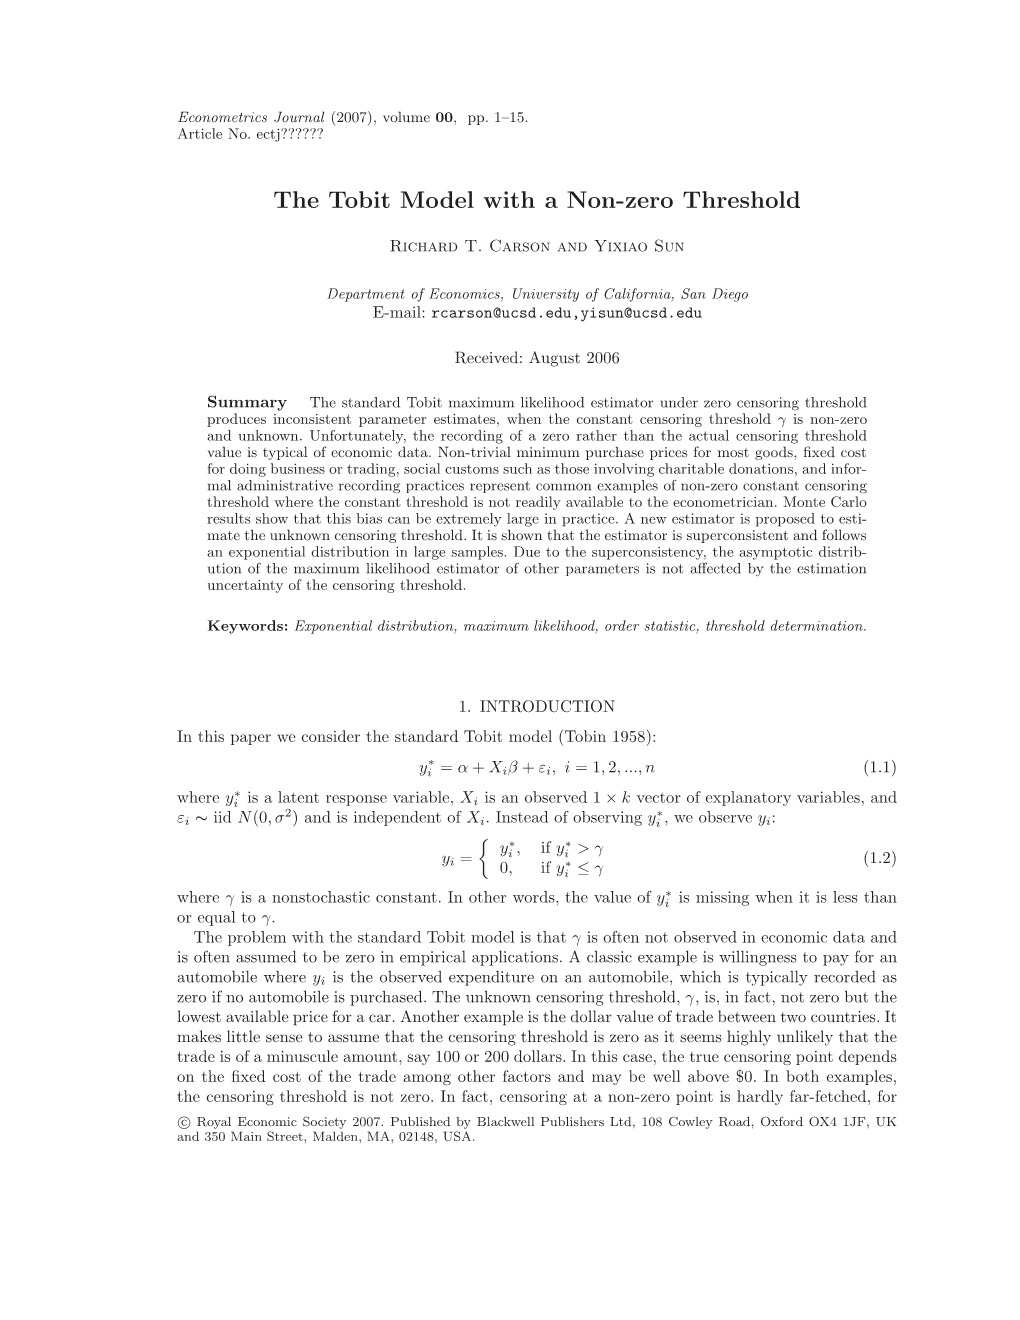 The Tobit Model with a Non-Zero Threshold